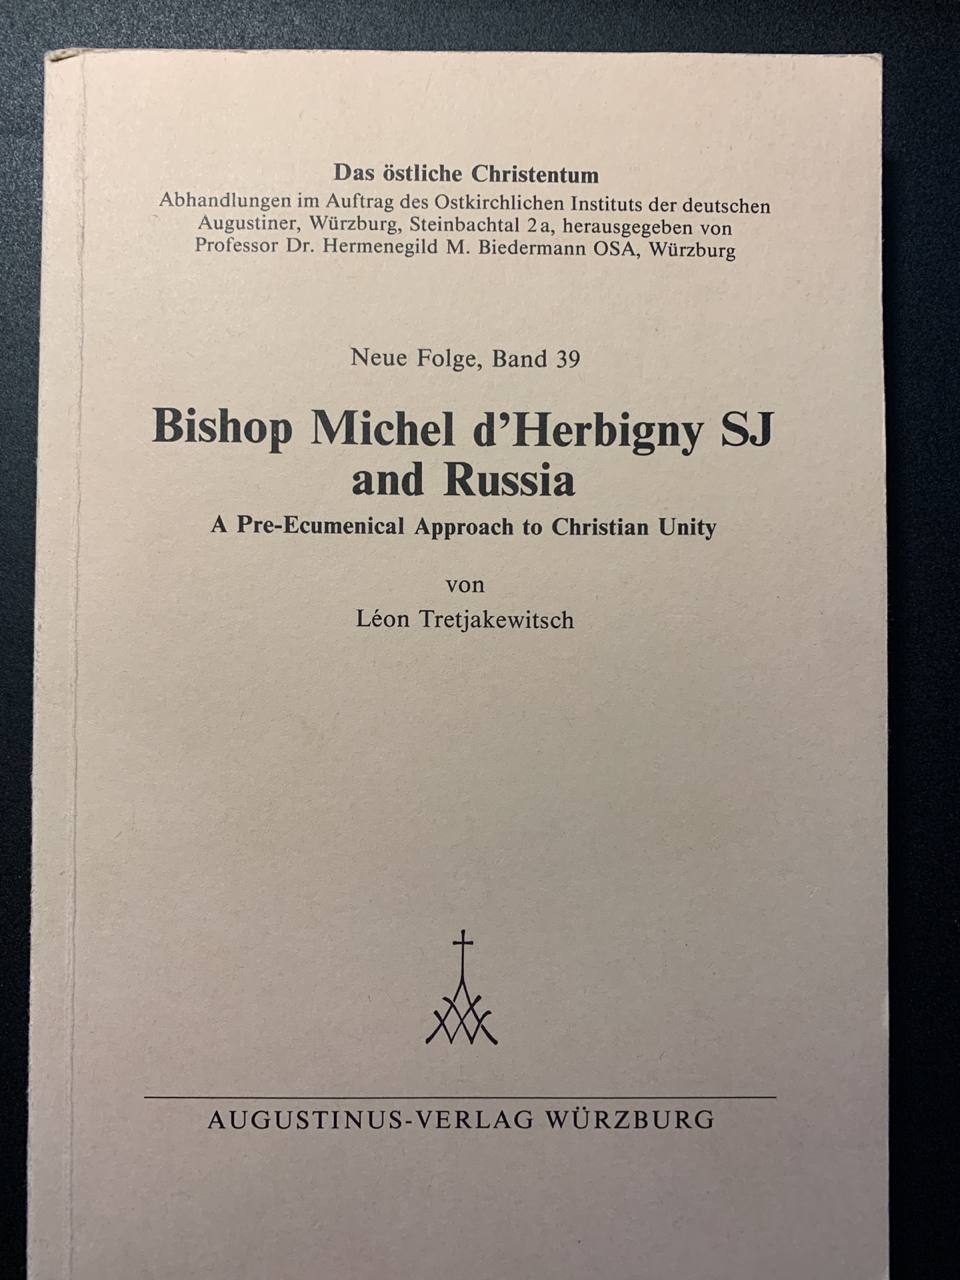 Bishop Michel d'Herbigny SJ and Russia: A pre-ecumenical approach to Christian unity (Das östliche Christentum) - Tretjakewitsch, Léon